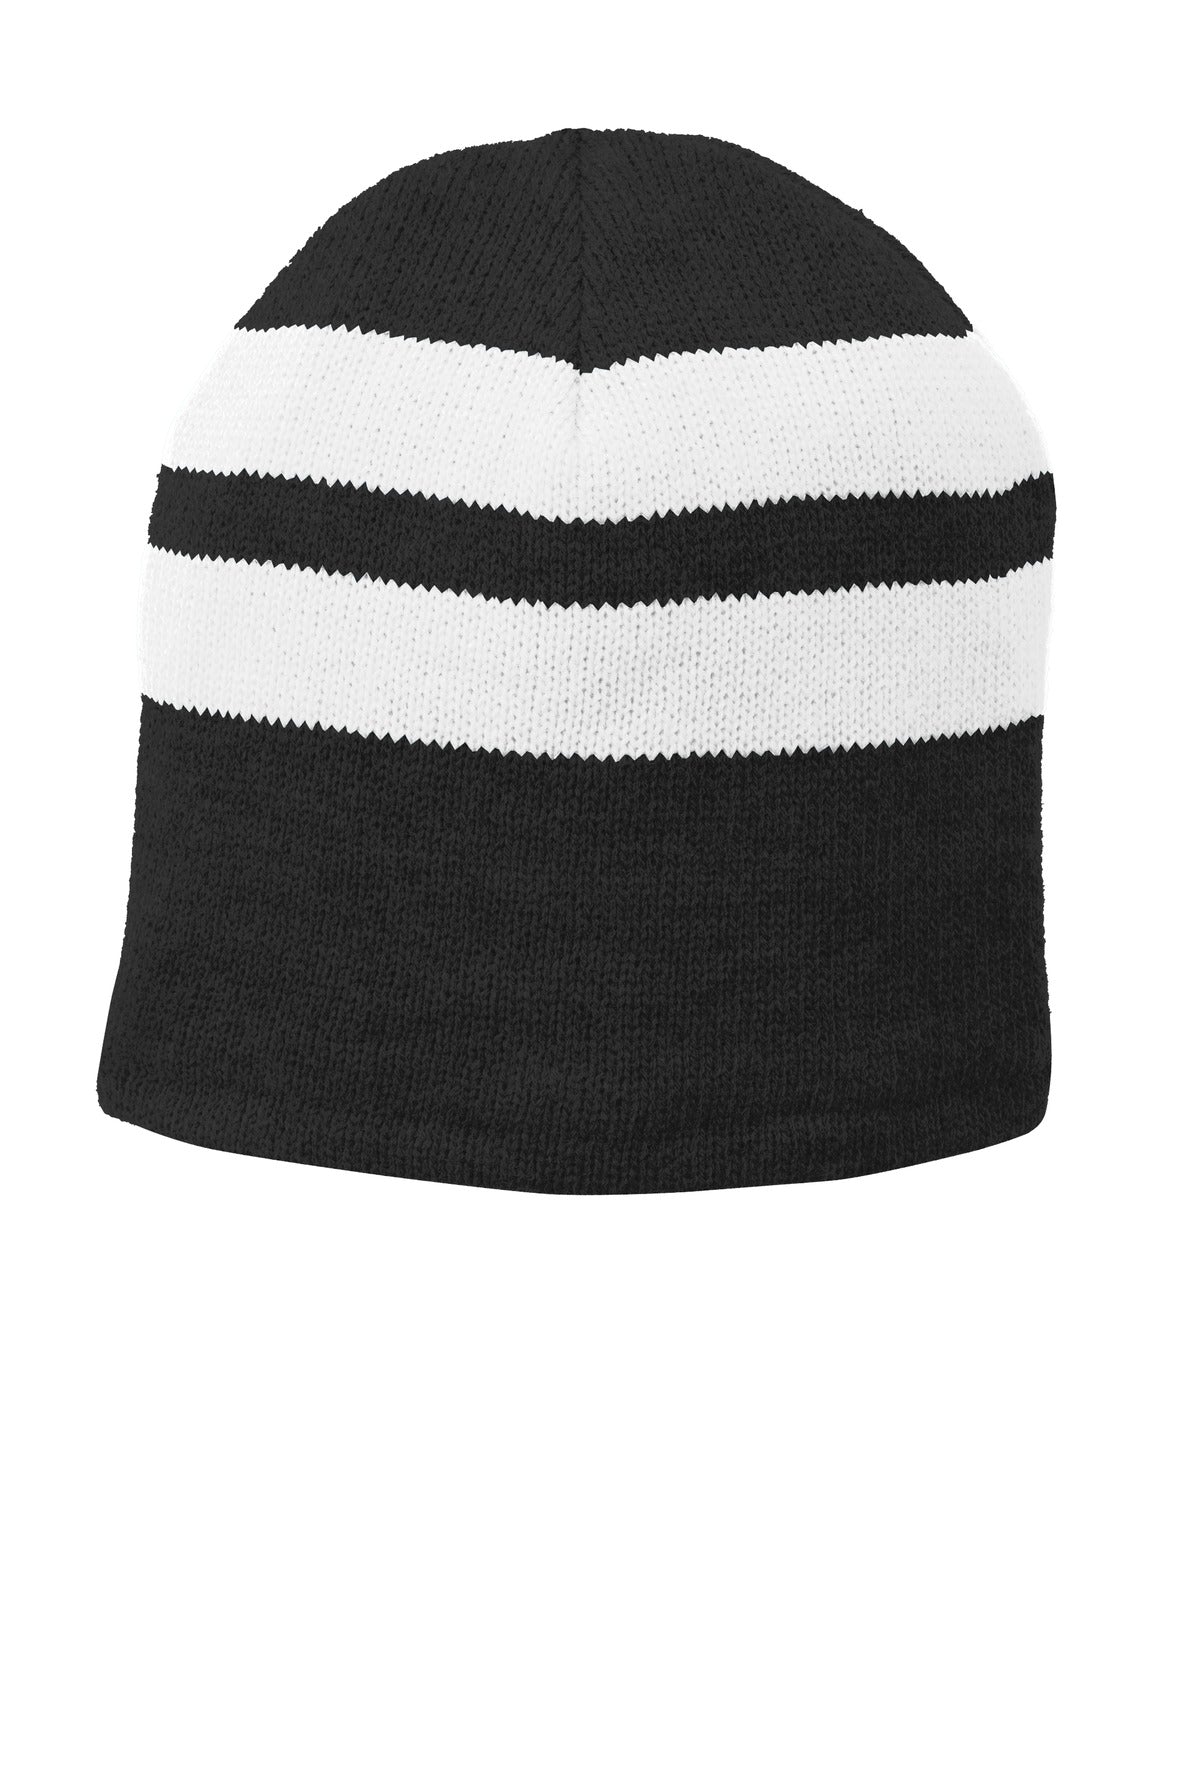 Next LevelPort & Company® Fleece-Lined Striped Beanie Cap. C922